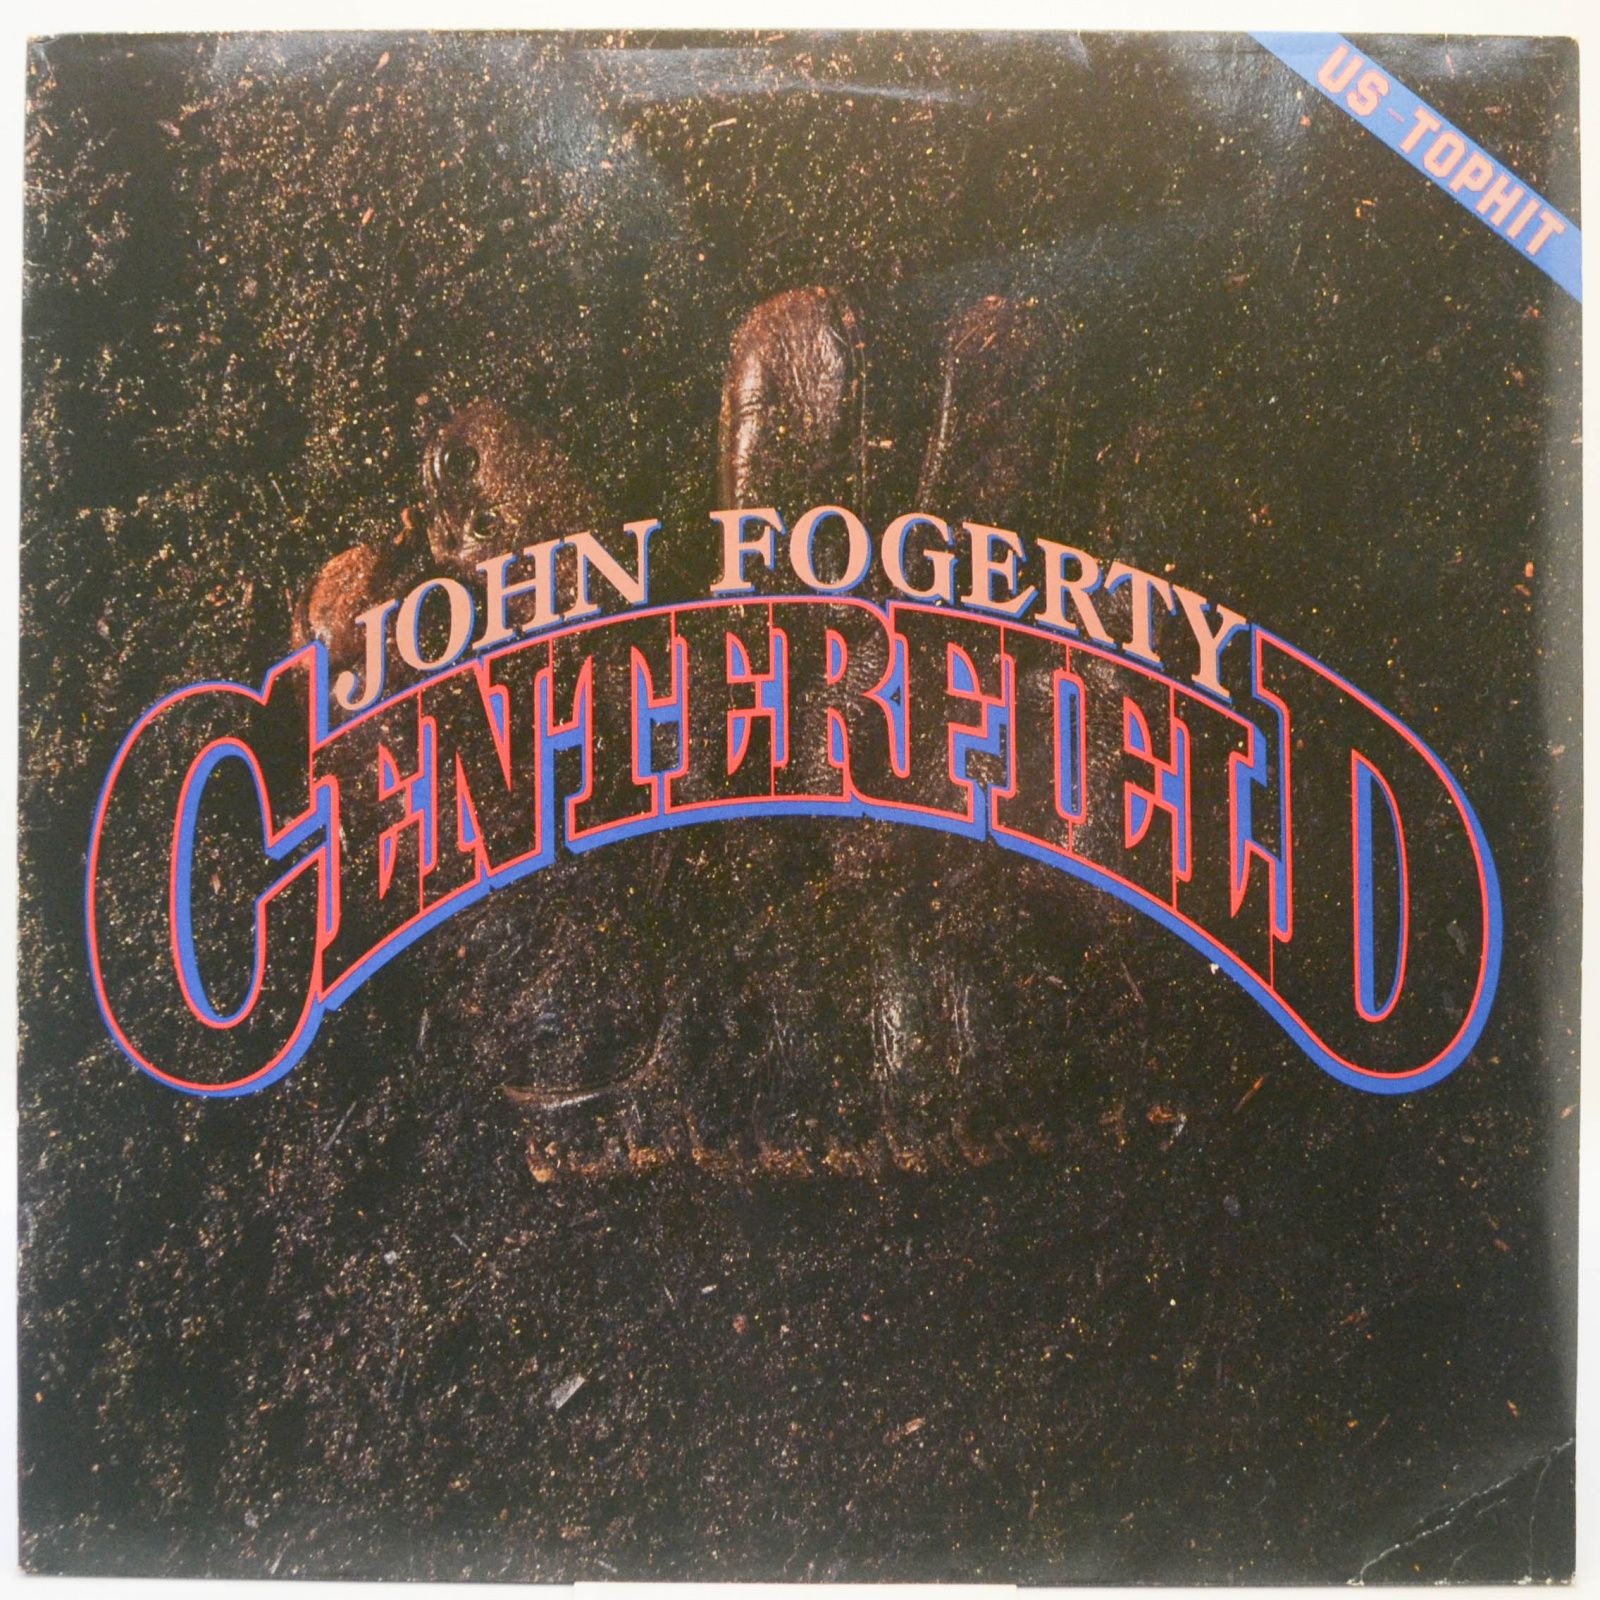 John Fogerty — Centerfield, 1985